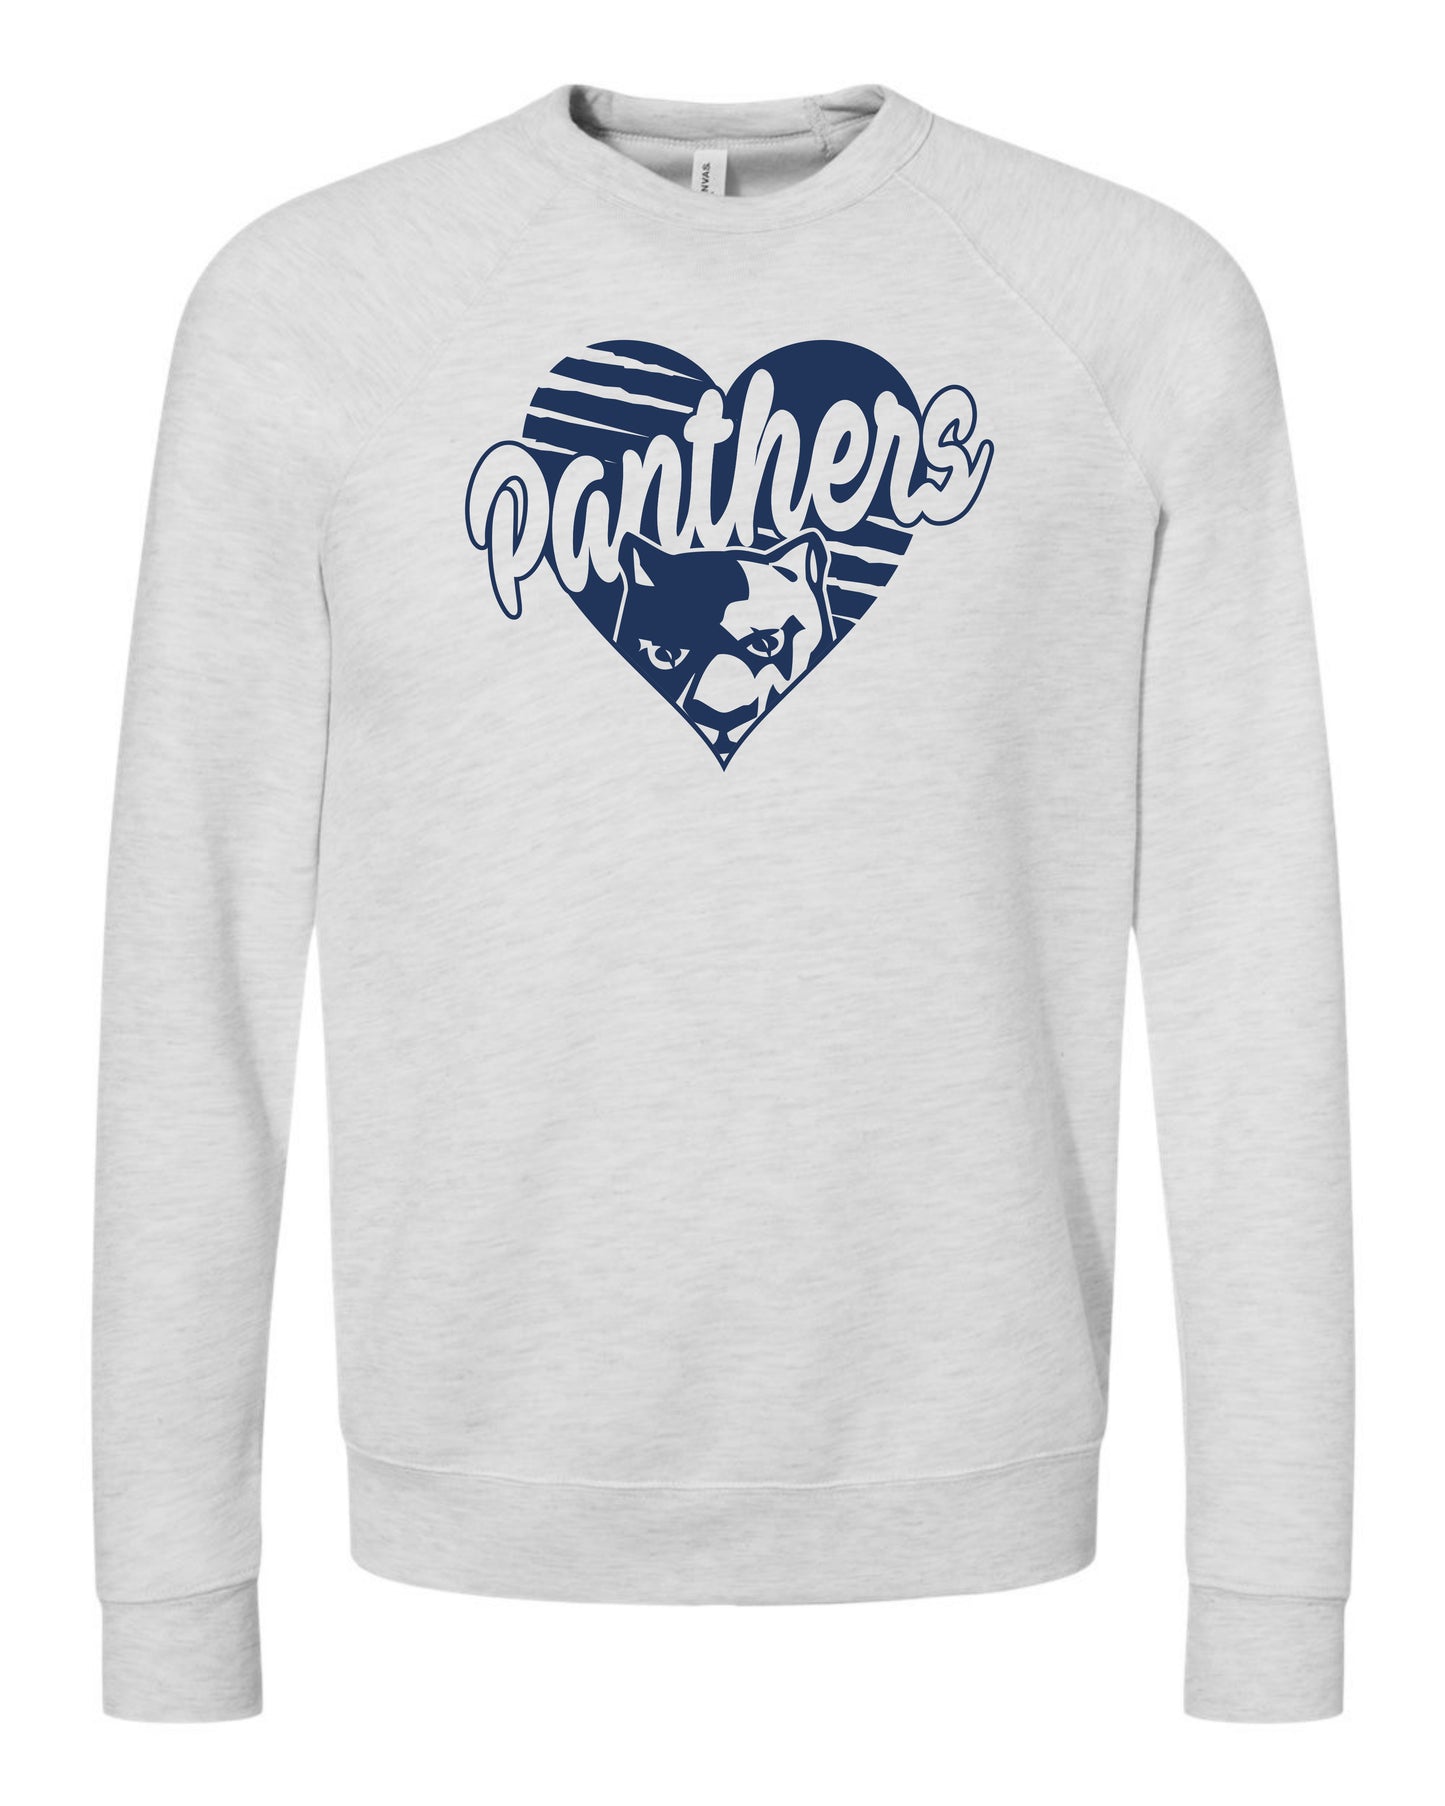 Panthers Heart - Adult Sweatshirt